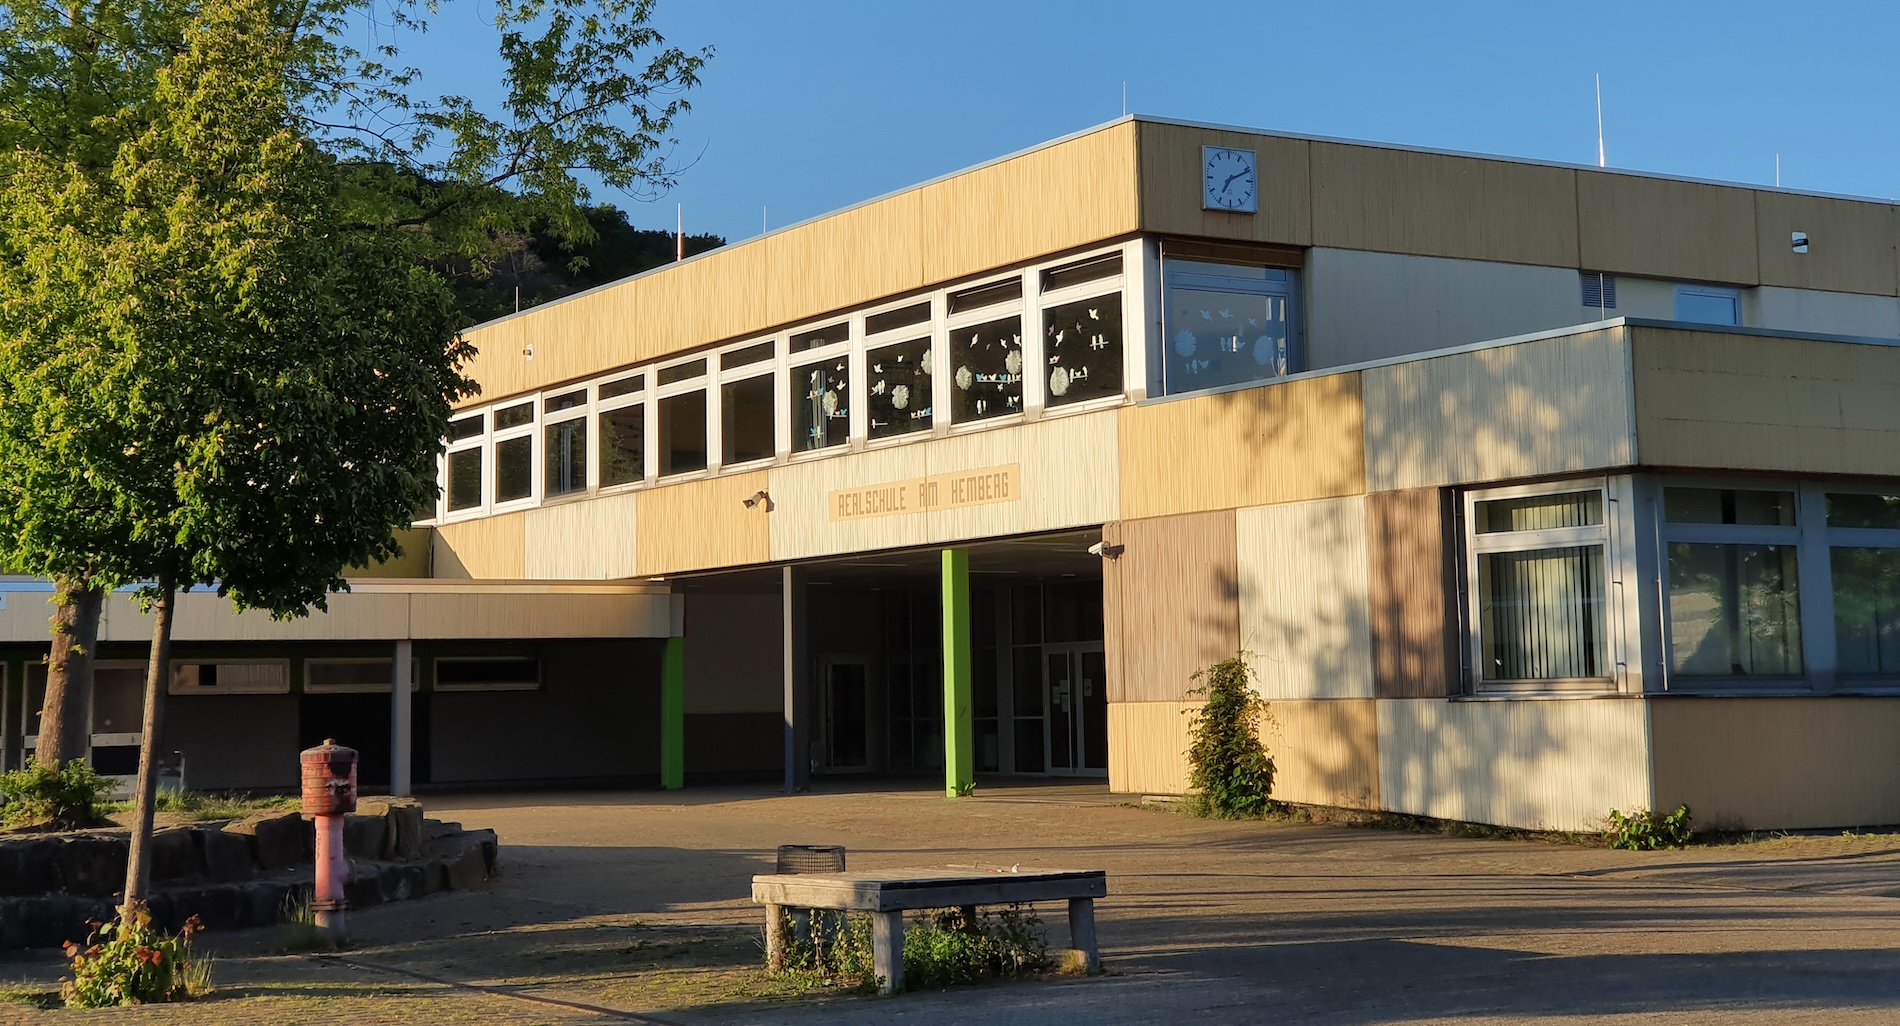 Realschule am Hemberg